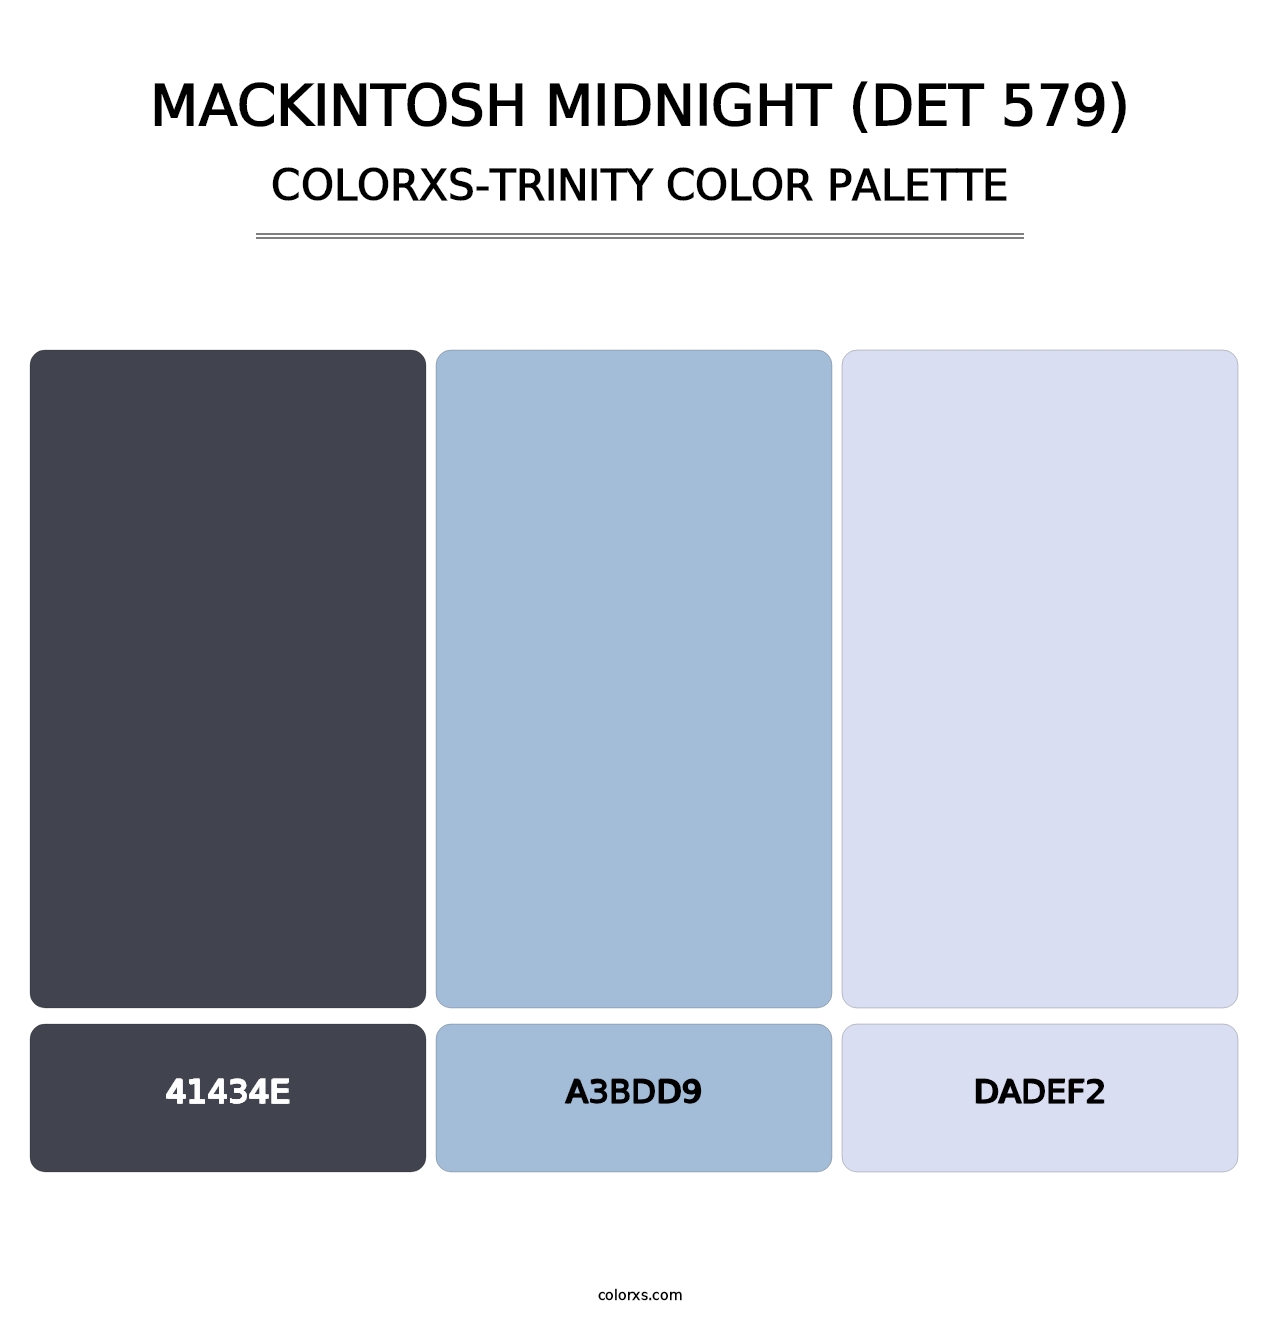 MacKintosh Midnight (DET 579) - Colorxs Trinity Palette